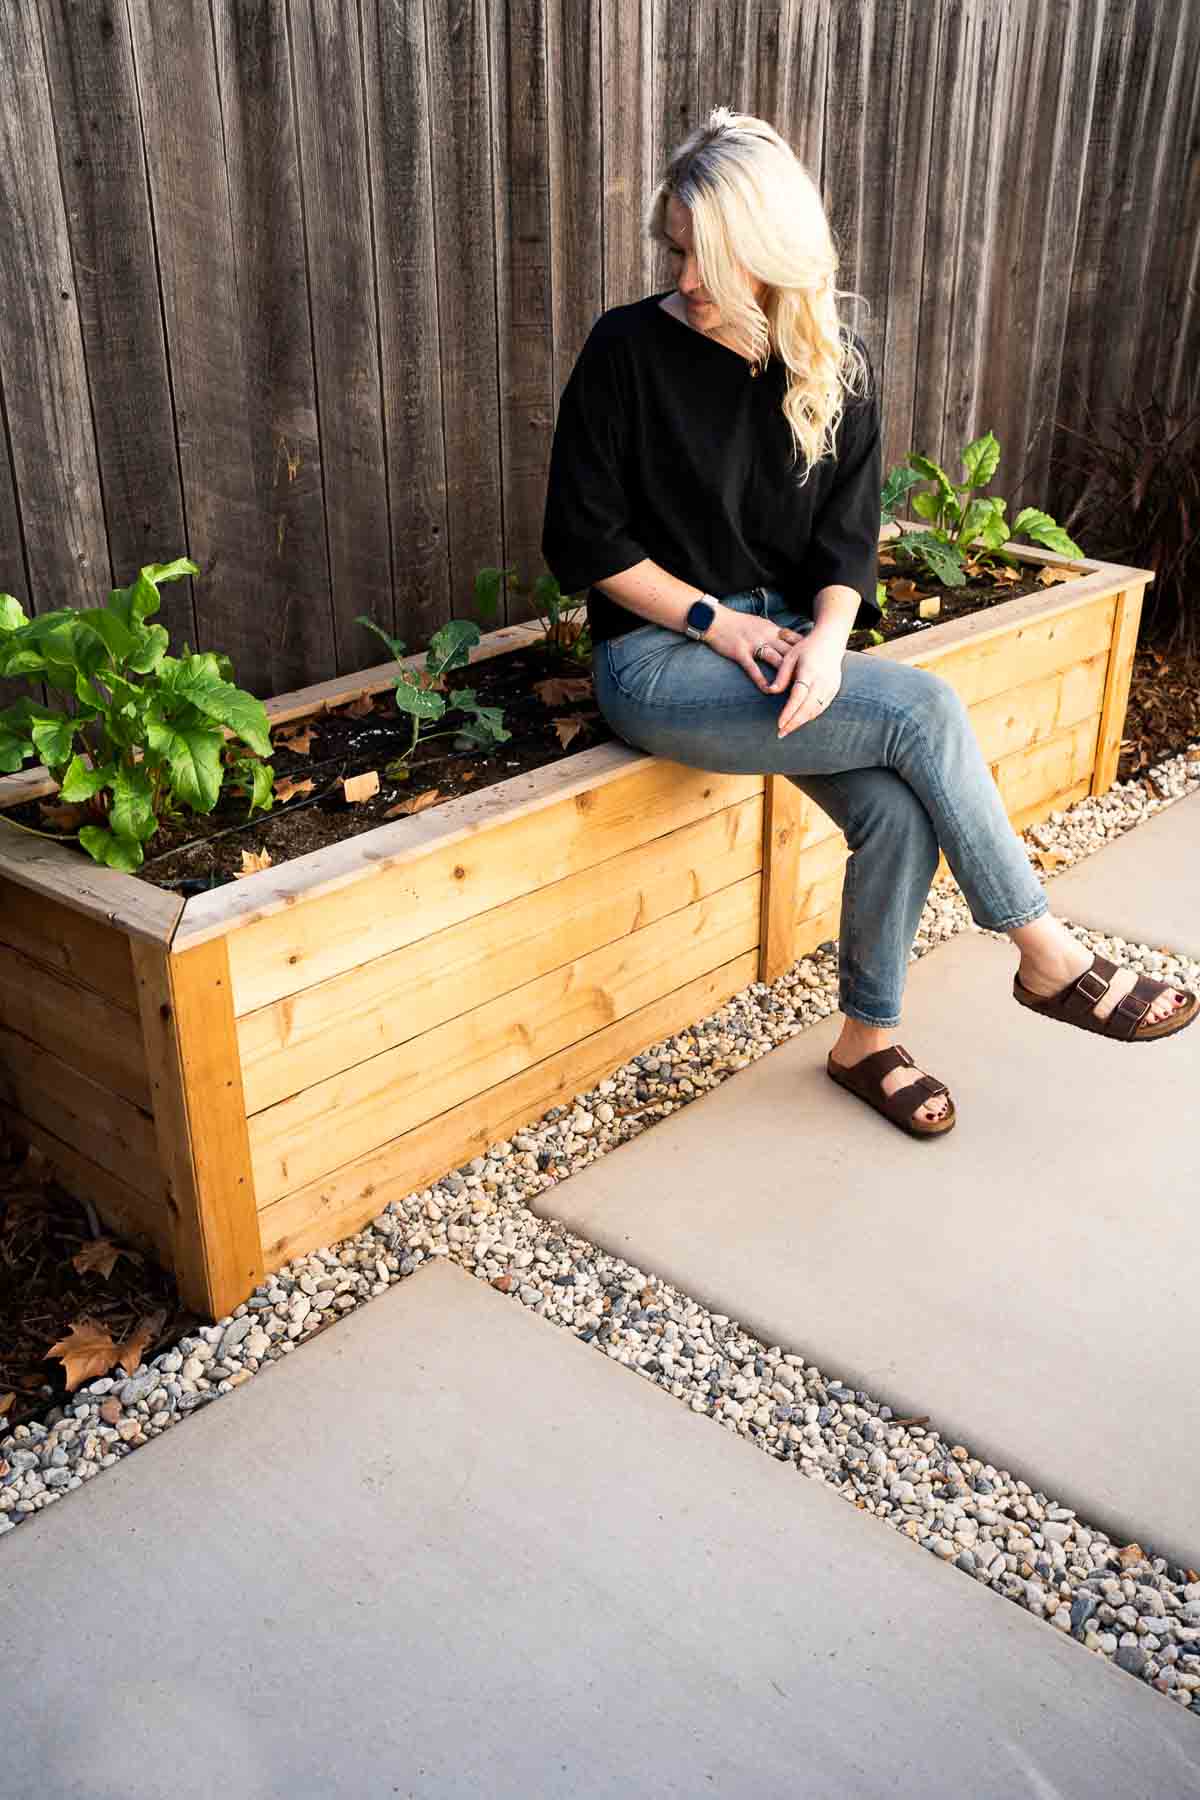 Eartheasy Cedar Garden Beds with plant starts